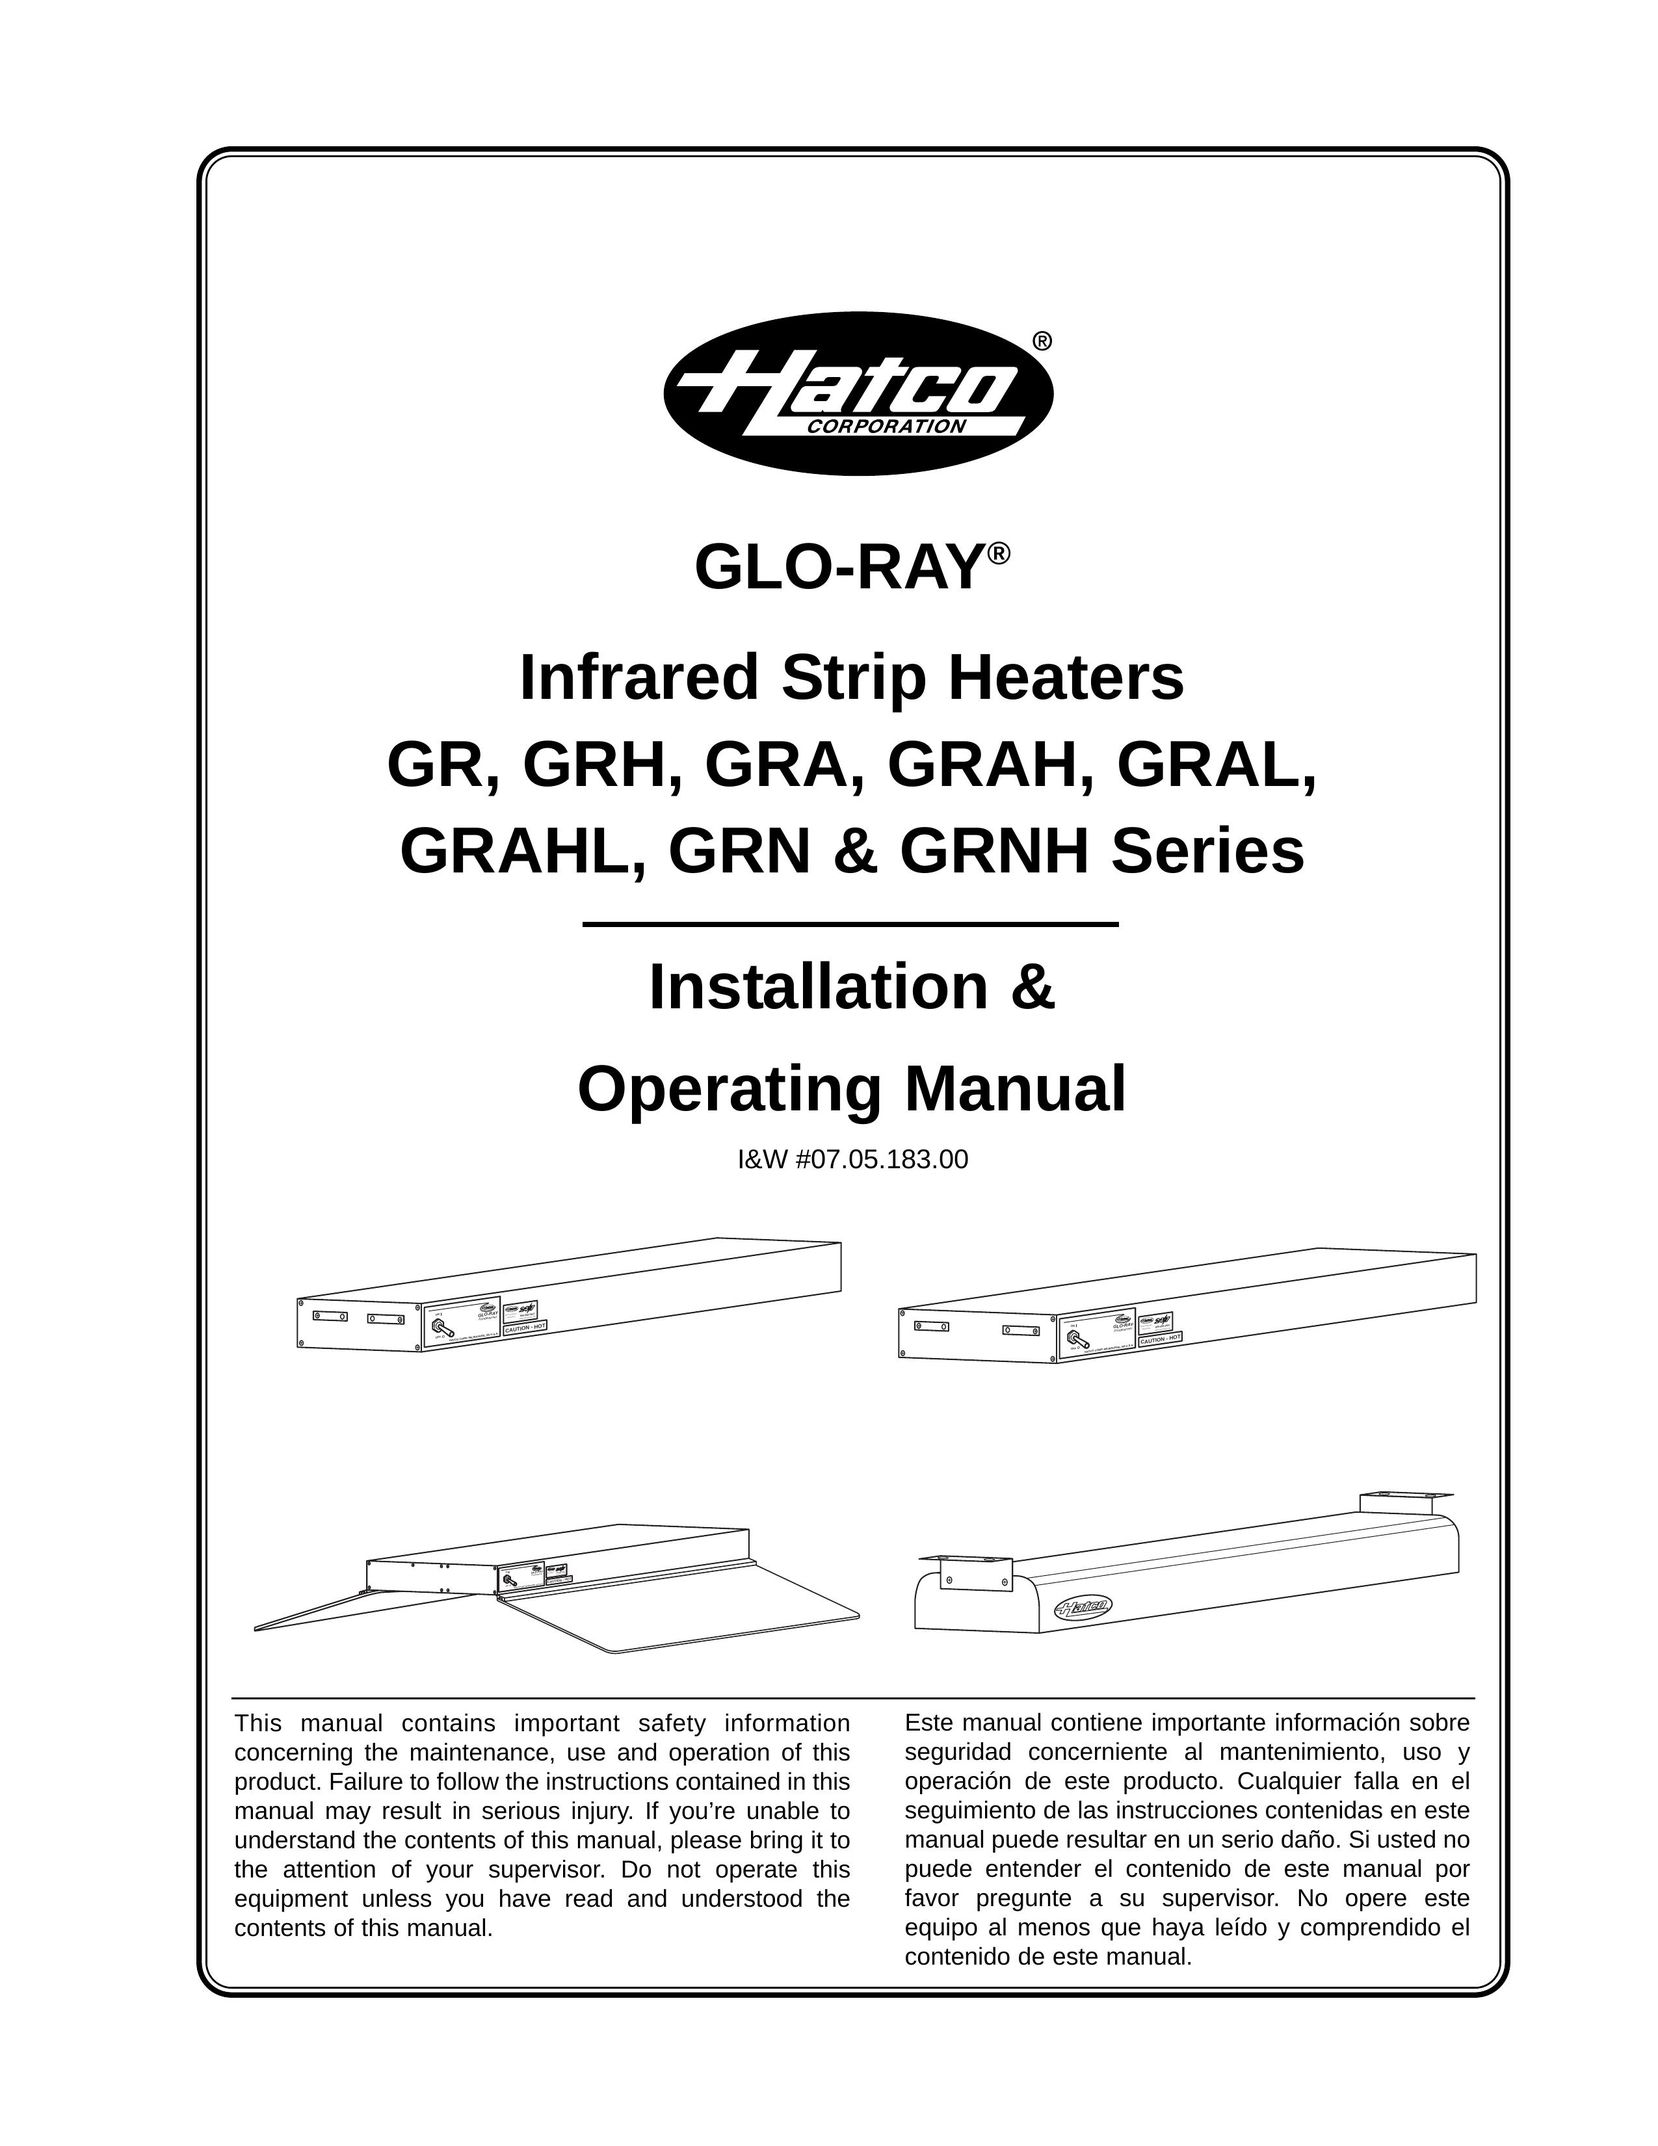 Hatco GRAL Printer Accessories User Manual